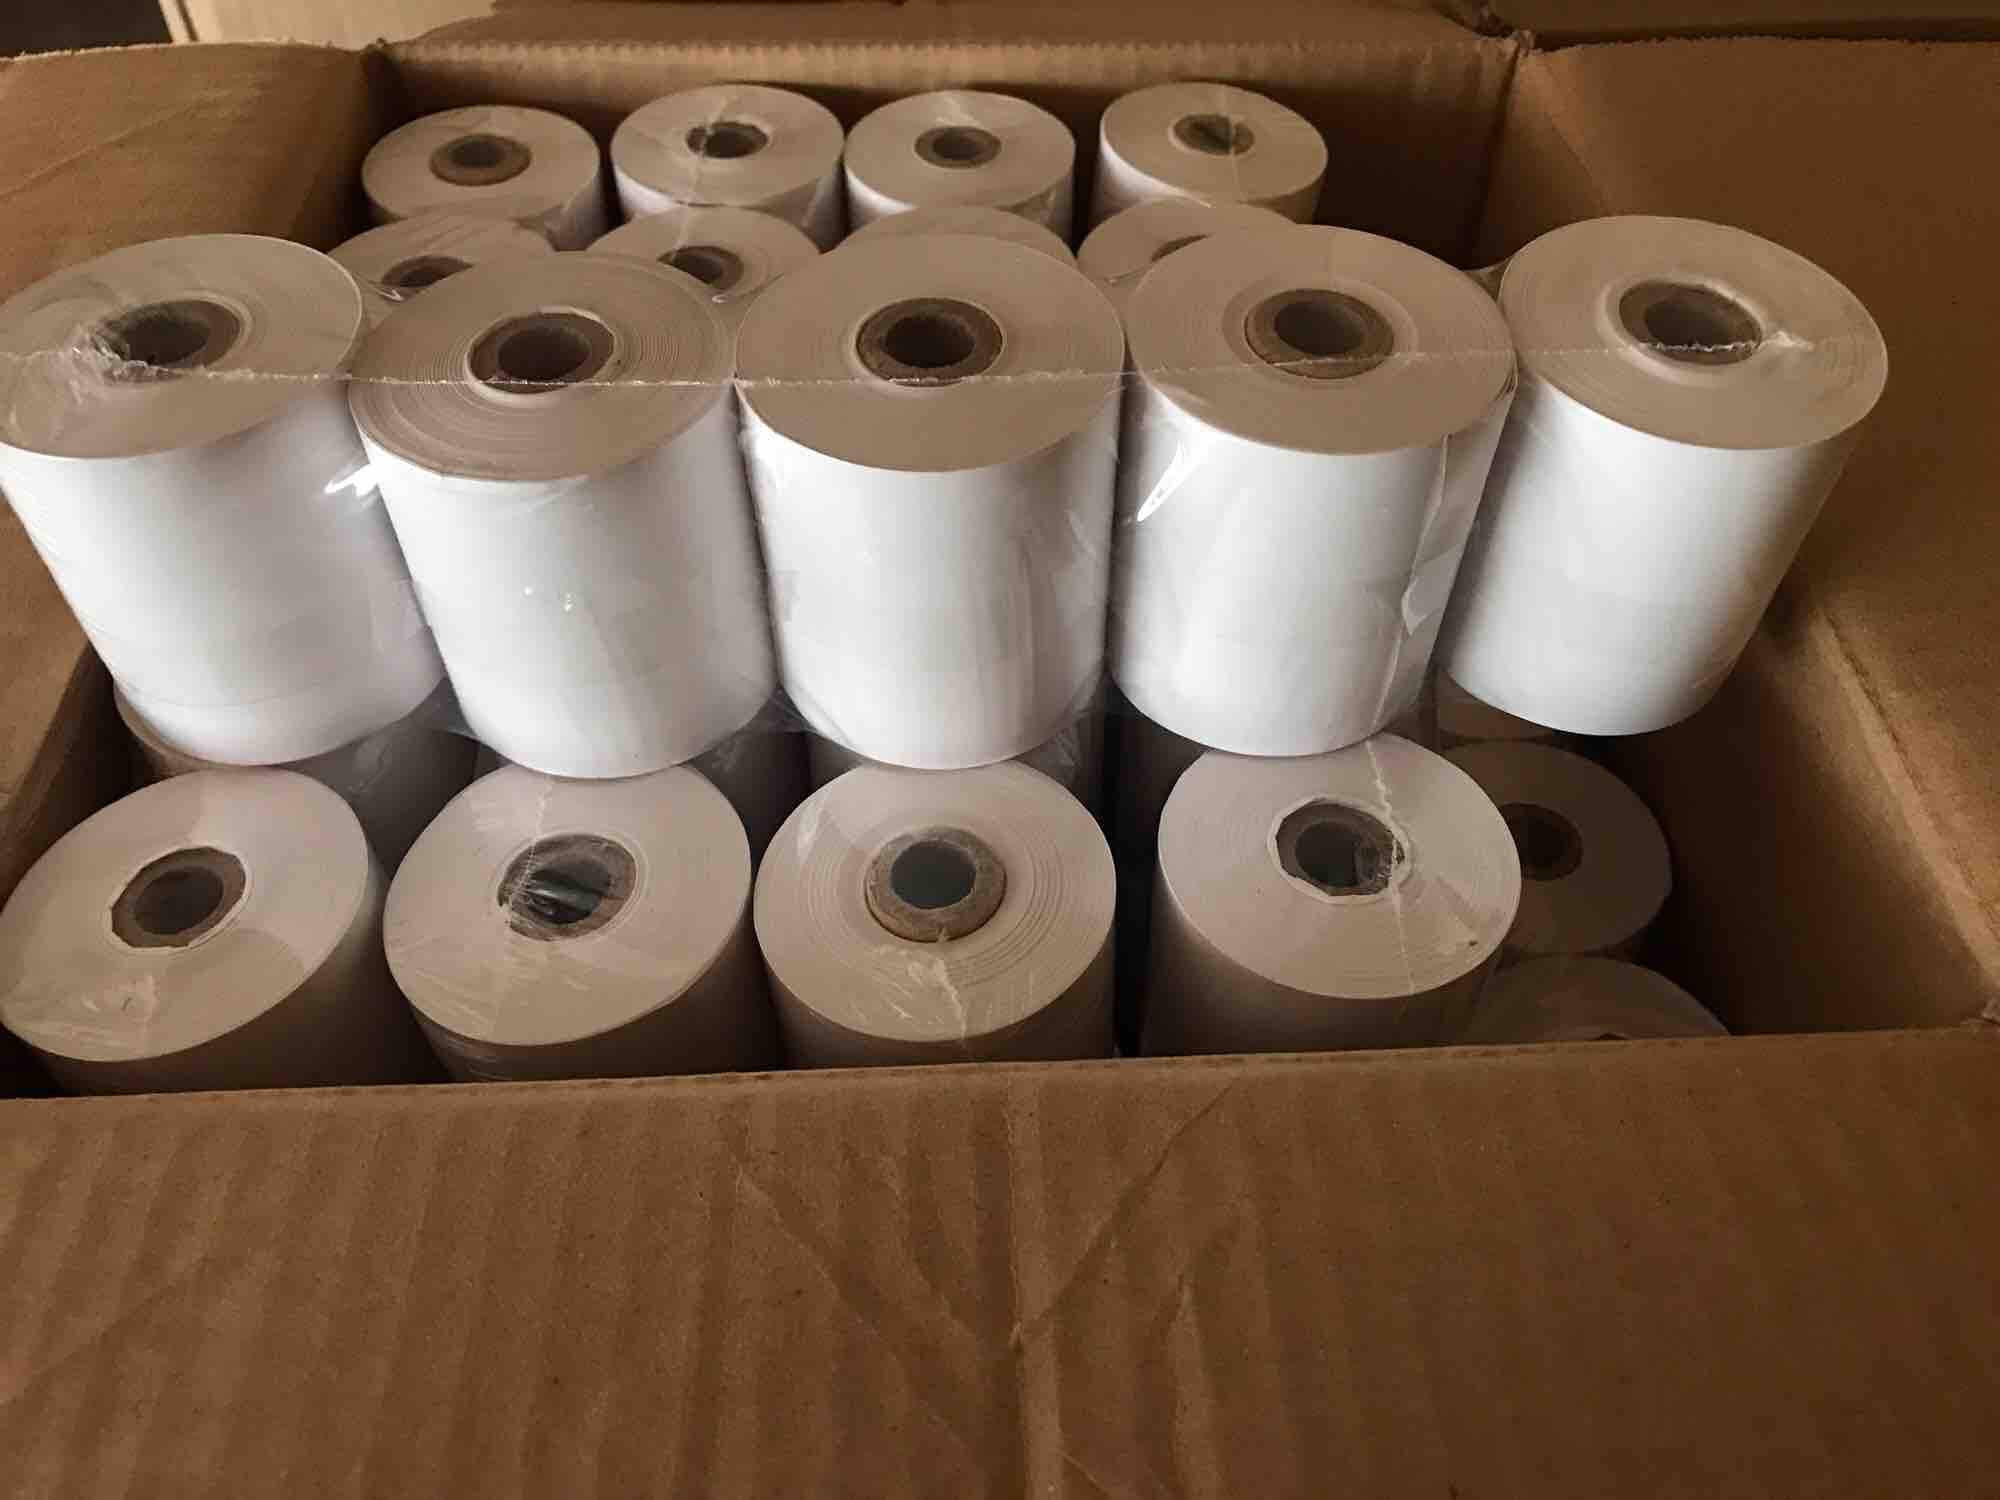 Good quality 56x50 / 57x50 mm (width x diameter) thermal paper rolls (small  core) 1 box 100 rolls for Xprinter , rongta , star , bixolon 58 mm printer  | Lazada PH